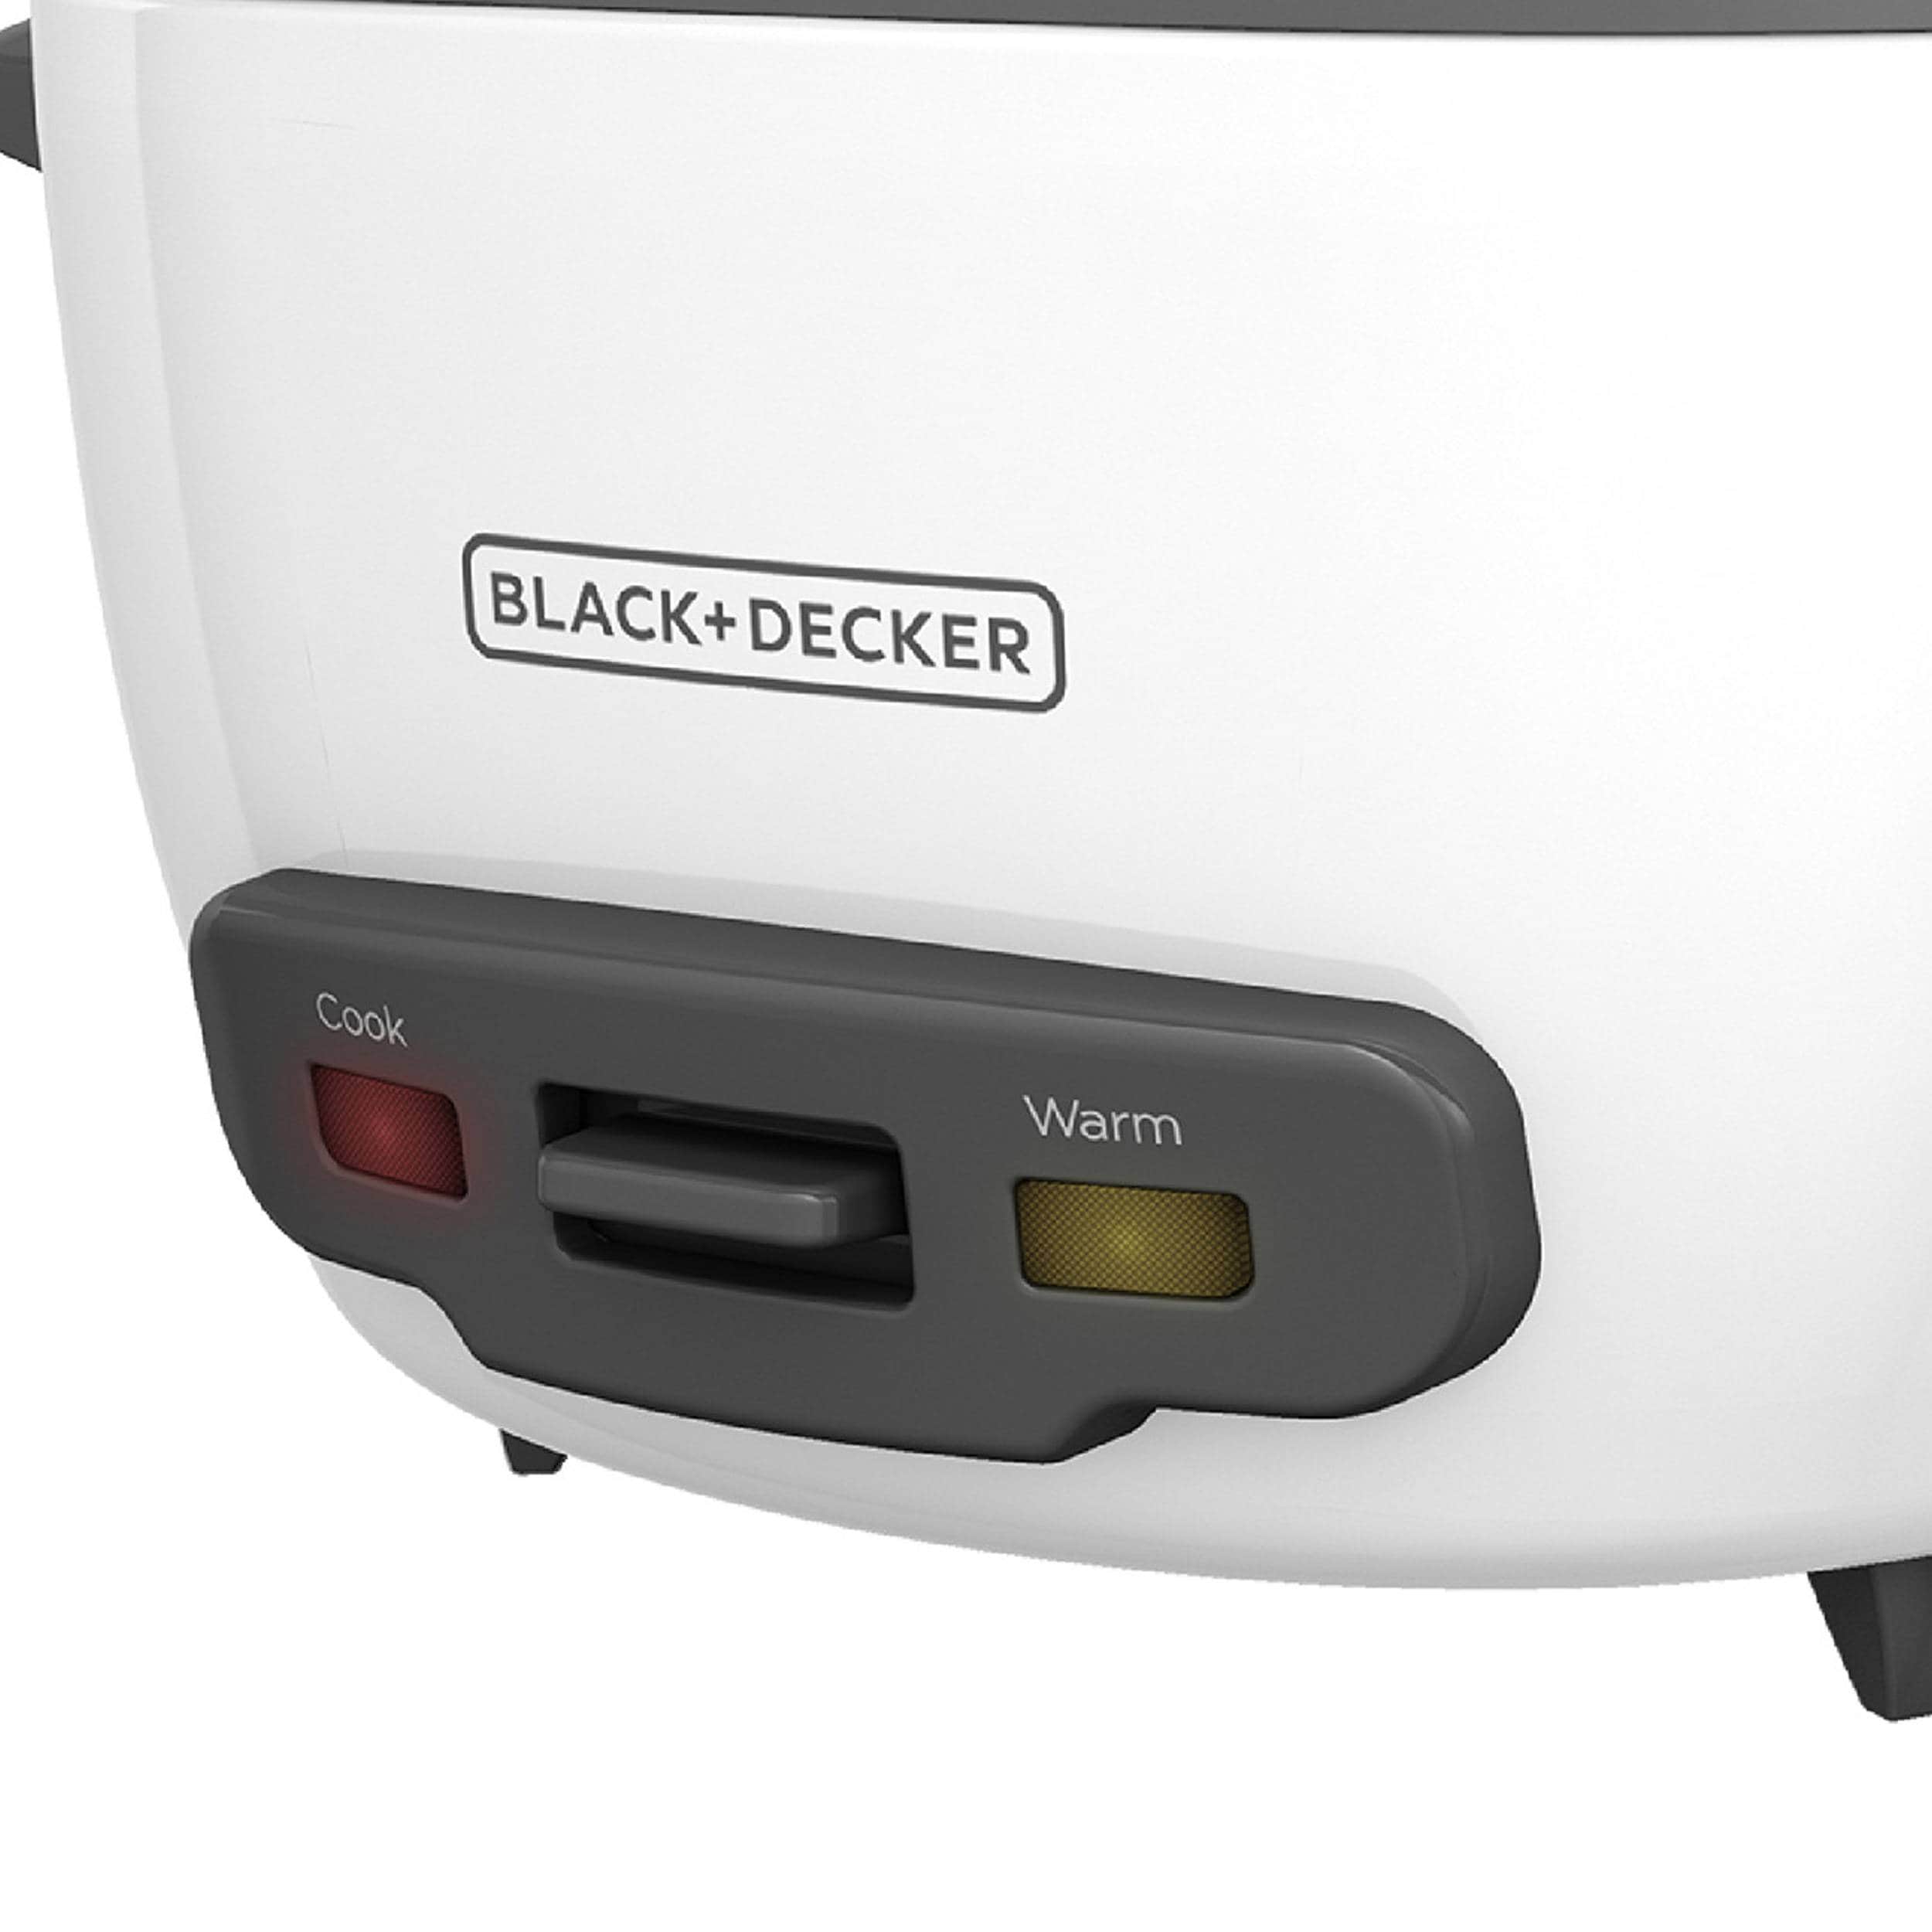 Black + Decker 14-Cup Rice Cooker 